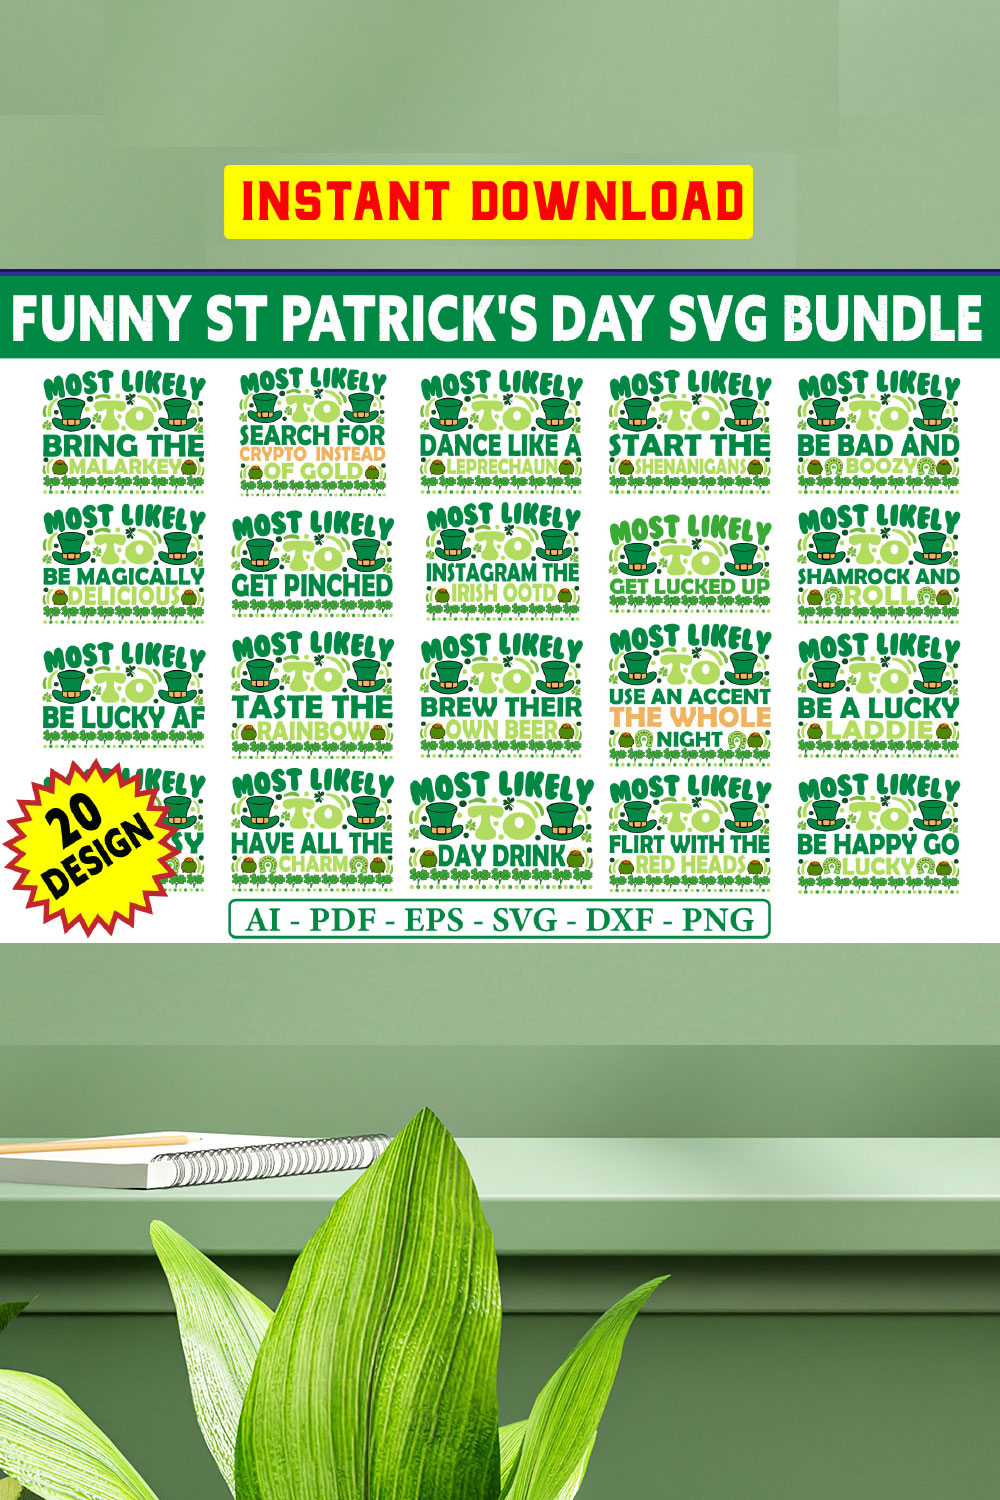 Funny St Patricks Day SVG Bundle, St Patrick's Day Quotes, Funny St Patricks Shirts, Drinking Shirt SVG pinterest preview image.